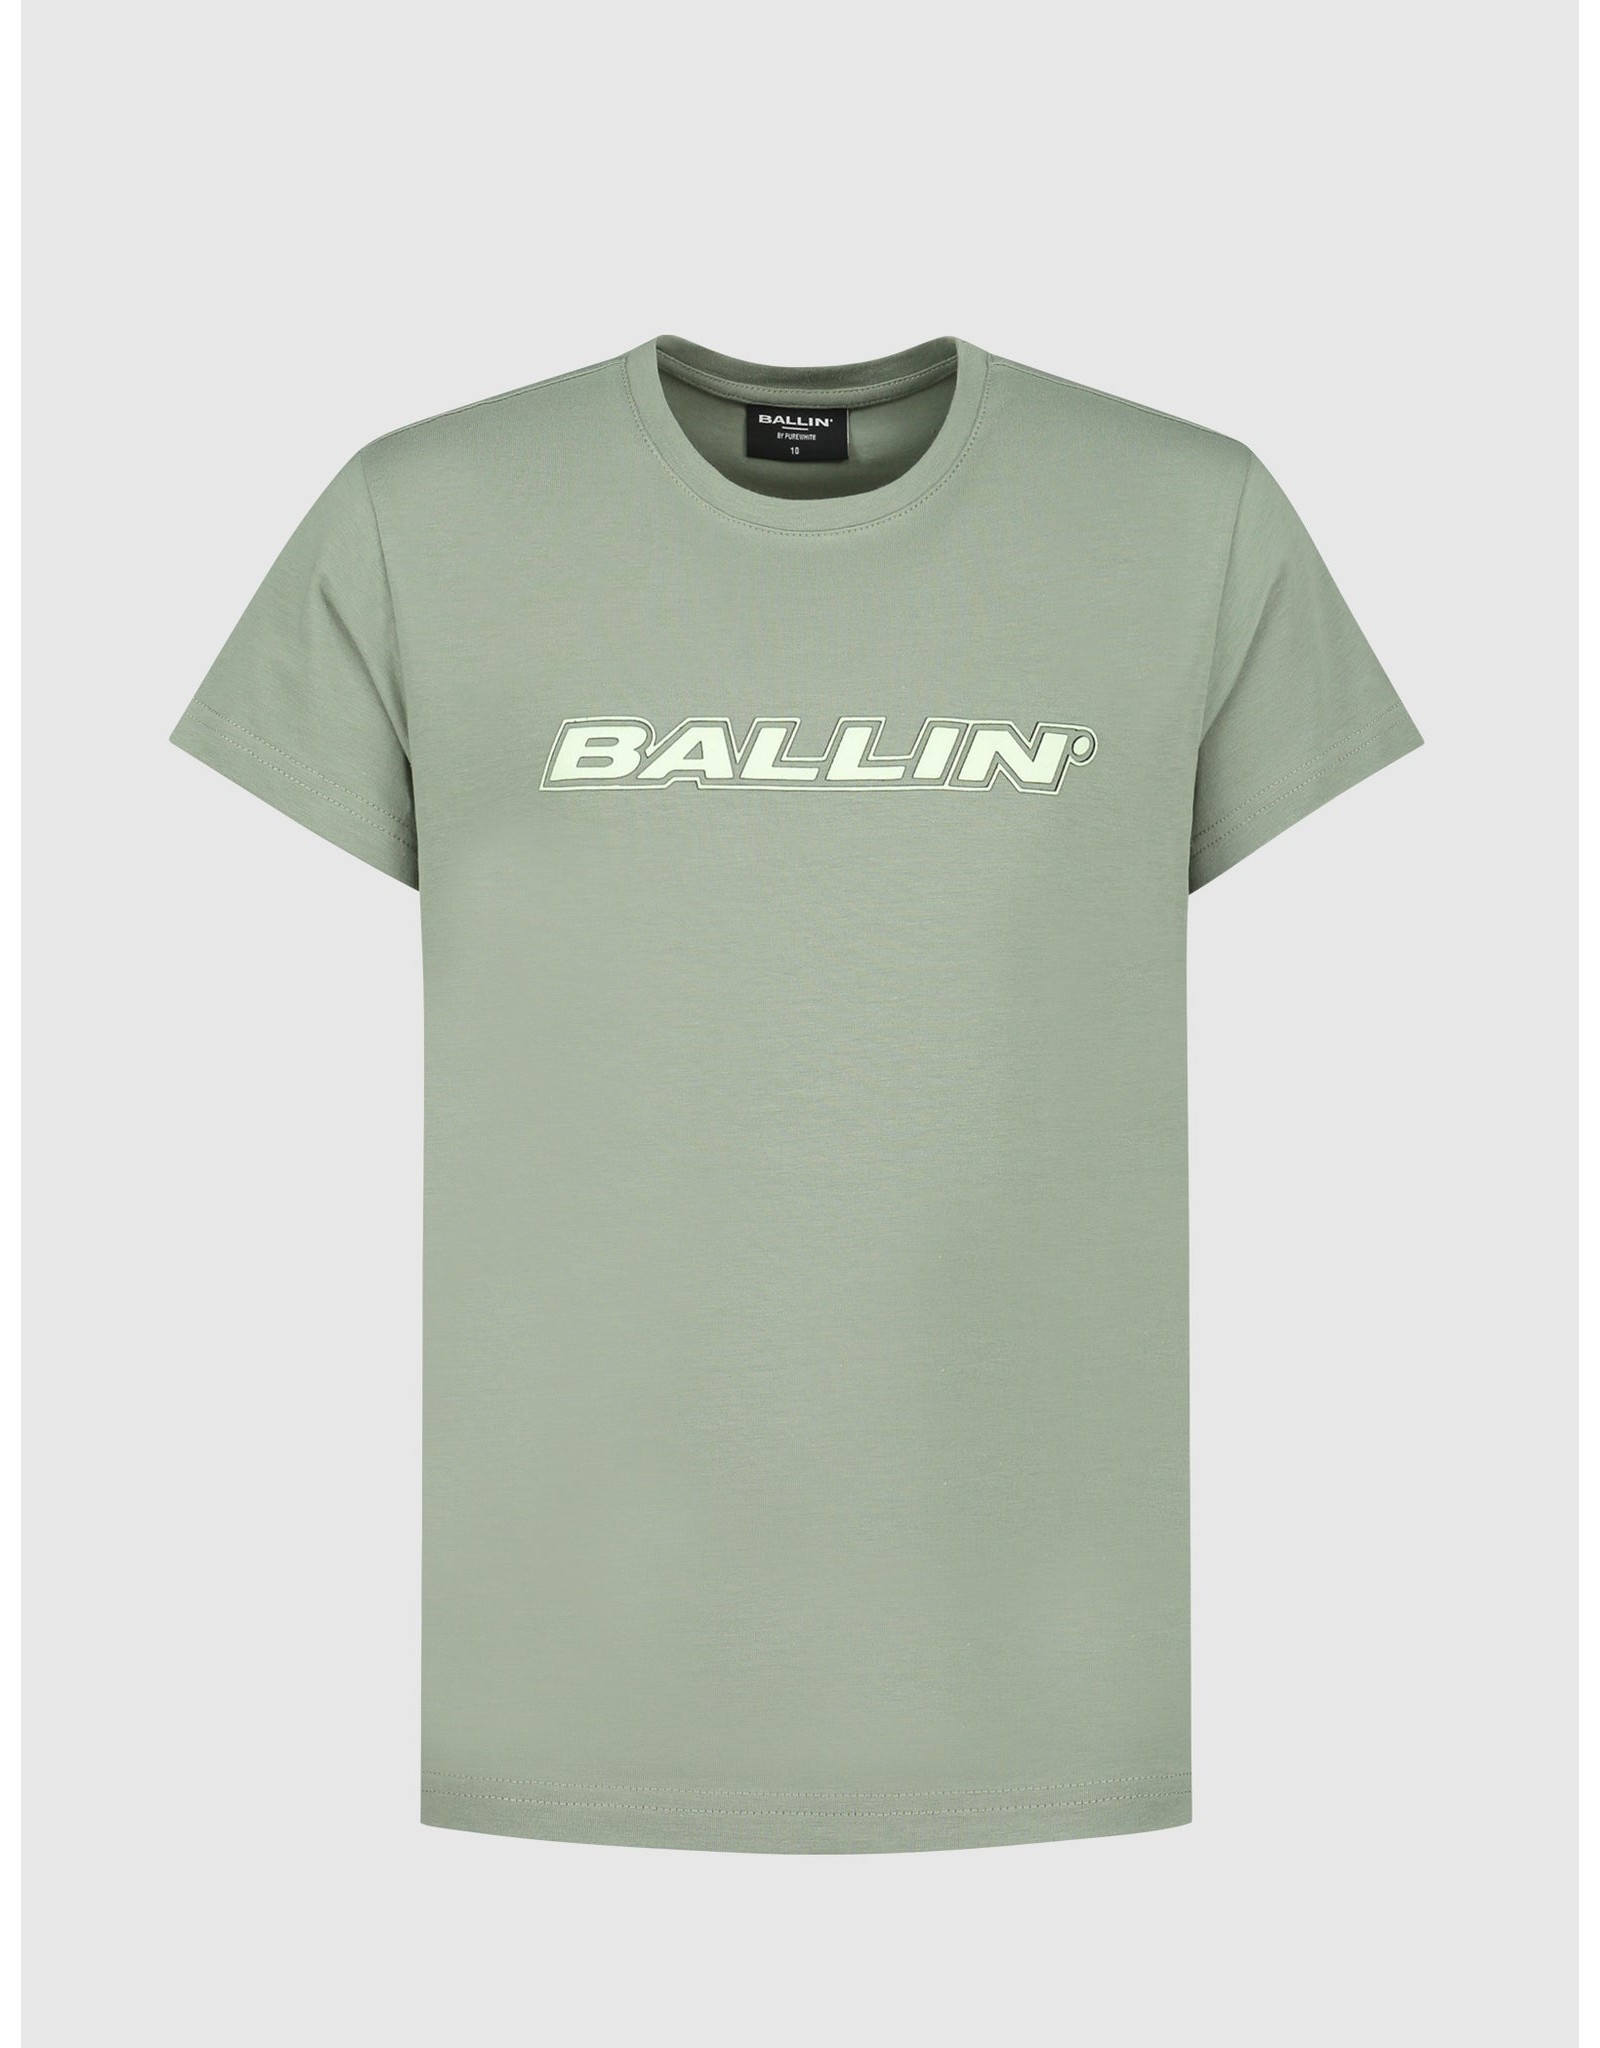 Ballin Amsterdam S22 T-shirt Green Army 10